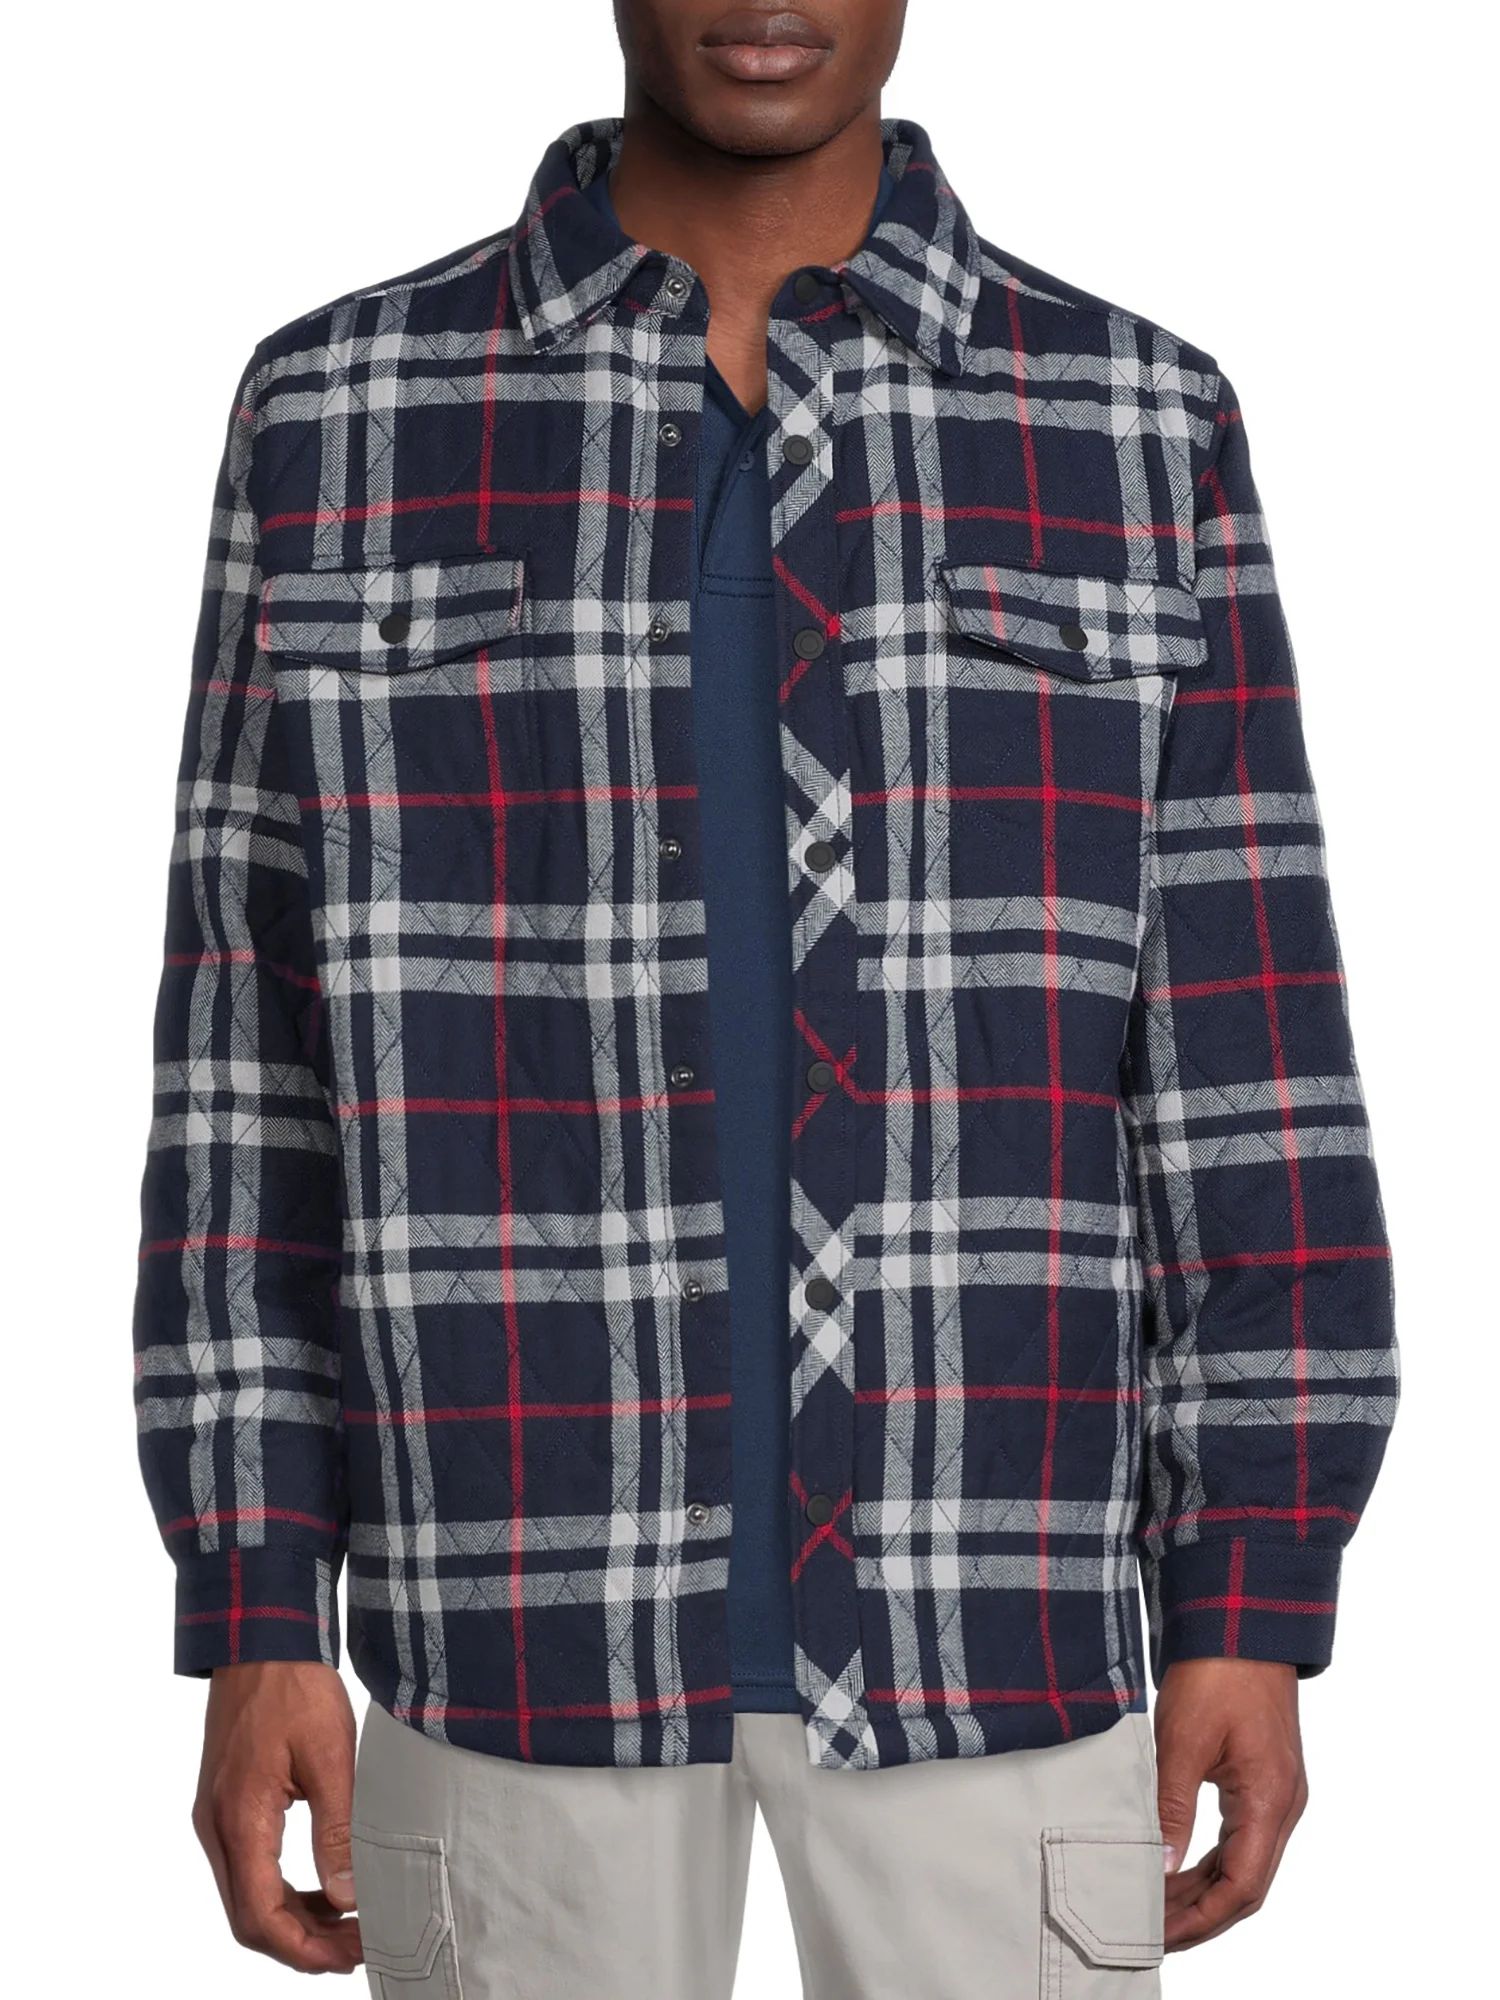 George Men's and Big Men's Shirt Jacket, Up to Size 5XL | Walmart (US)